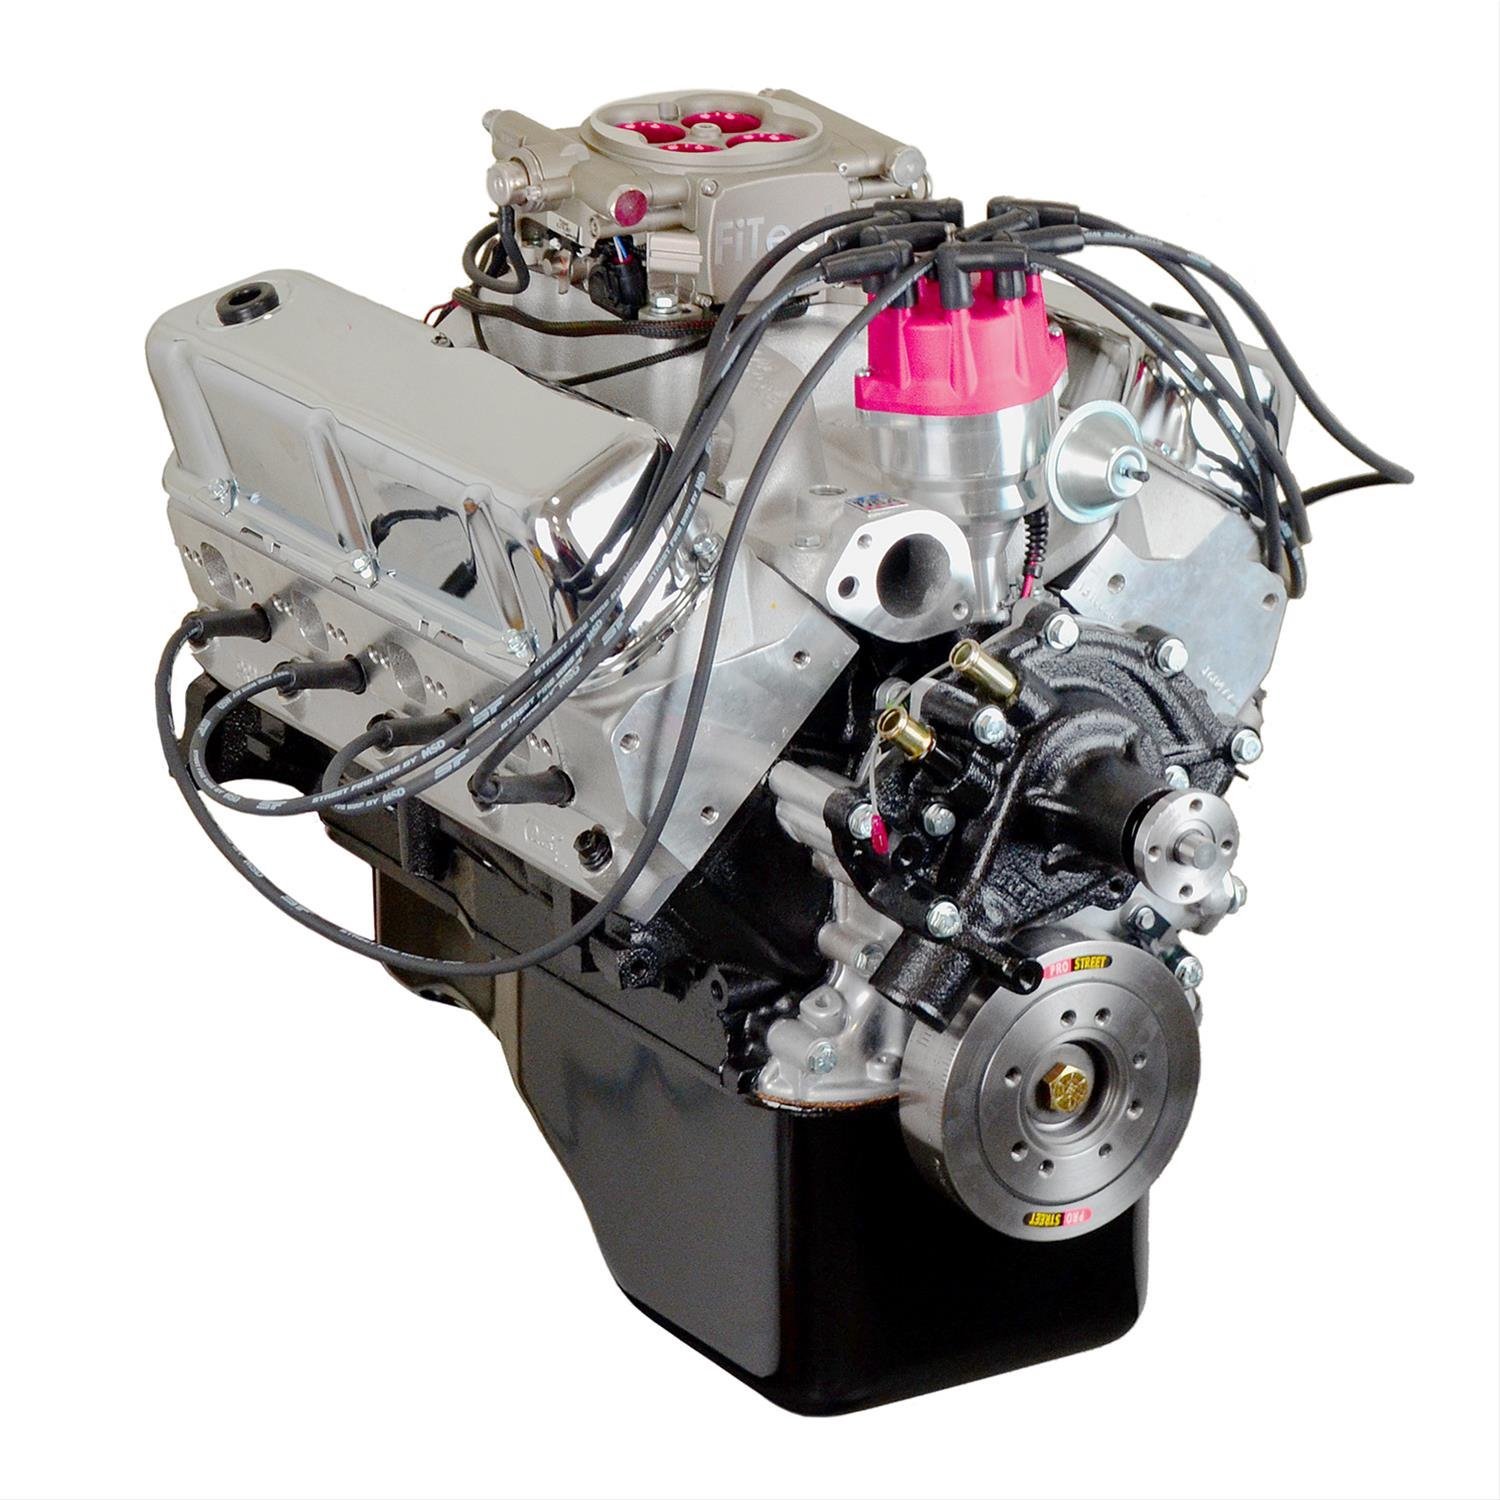 HP78C-EFI High Performance Crate Engine Small Block Ford 302ci / 375HP / 380TQ